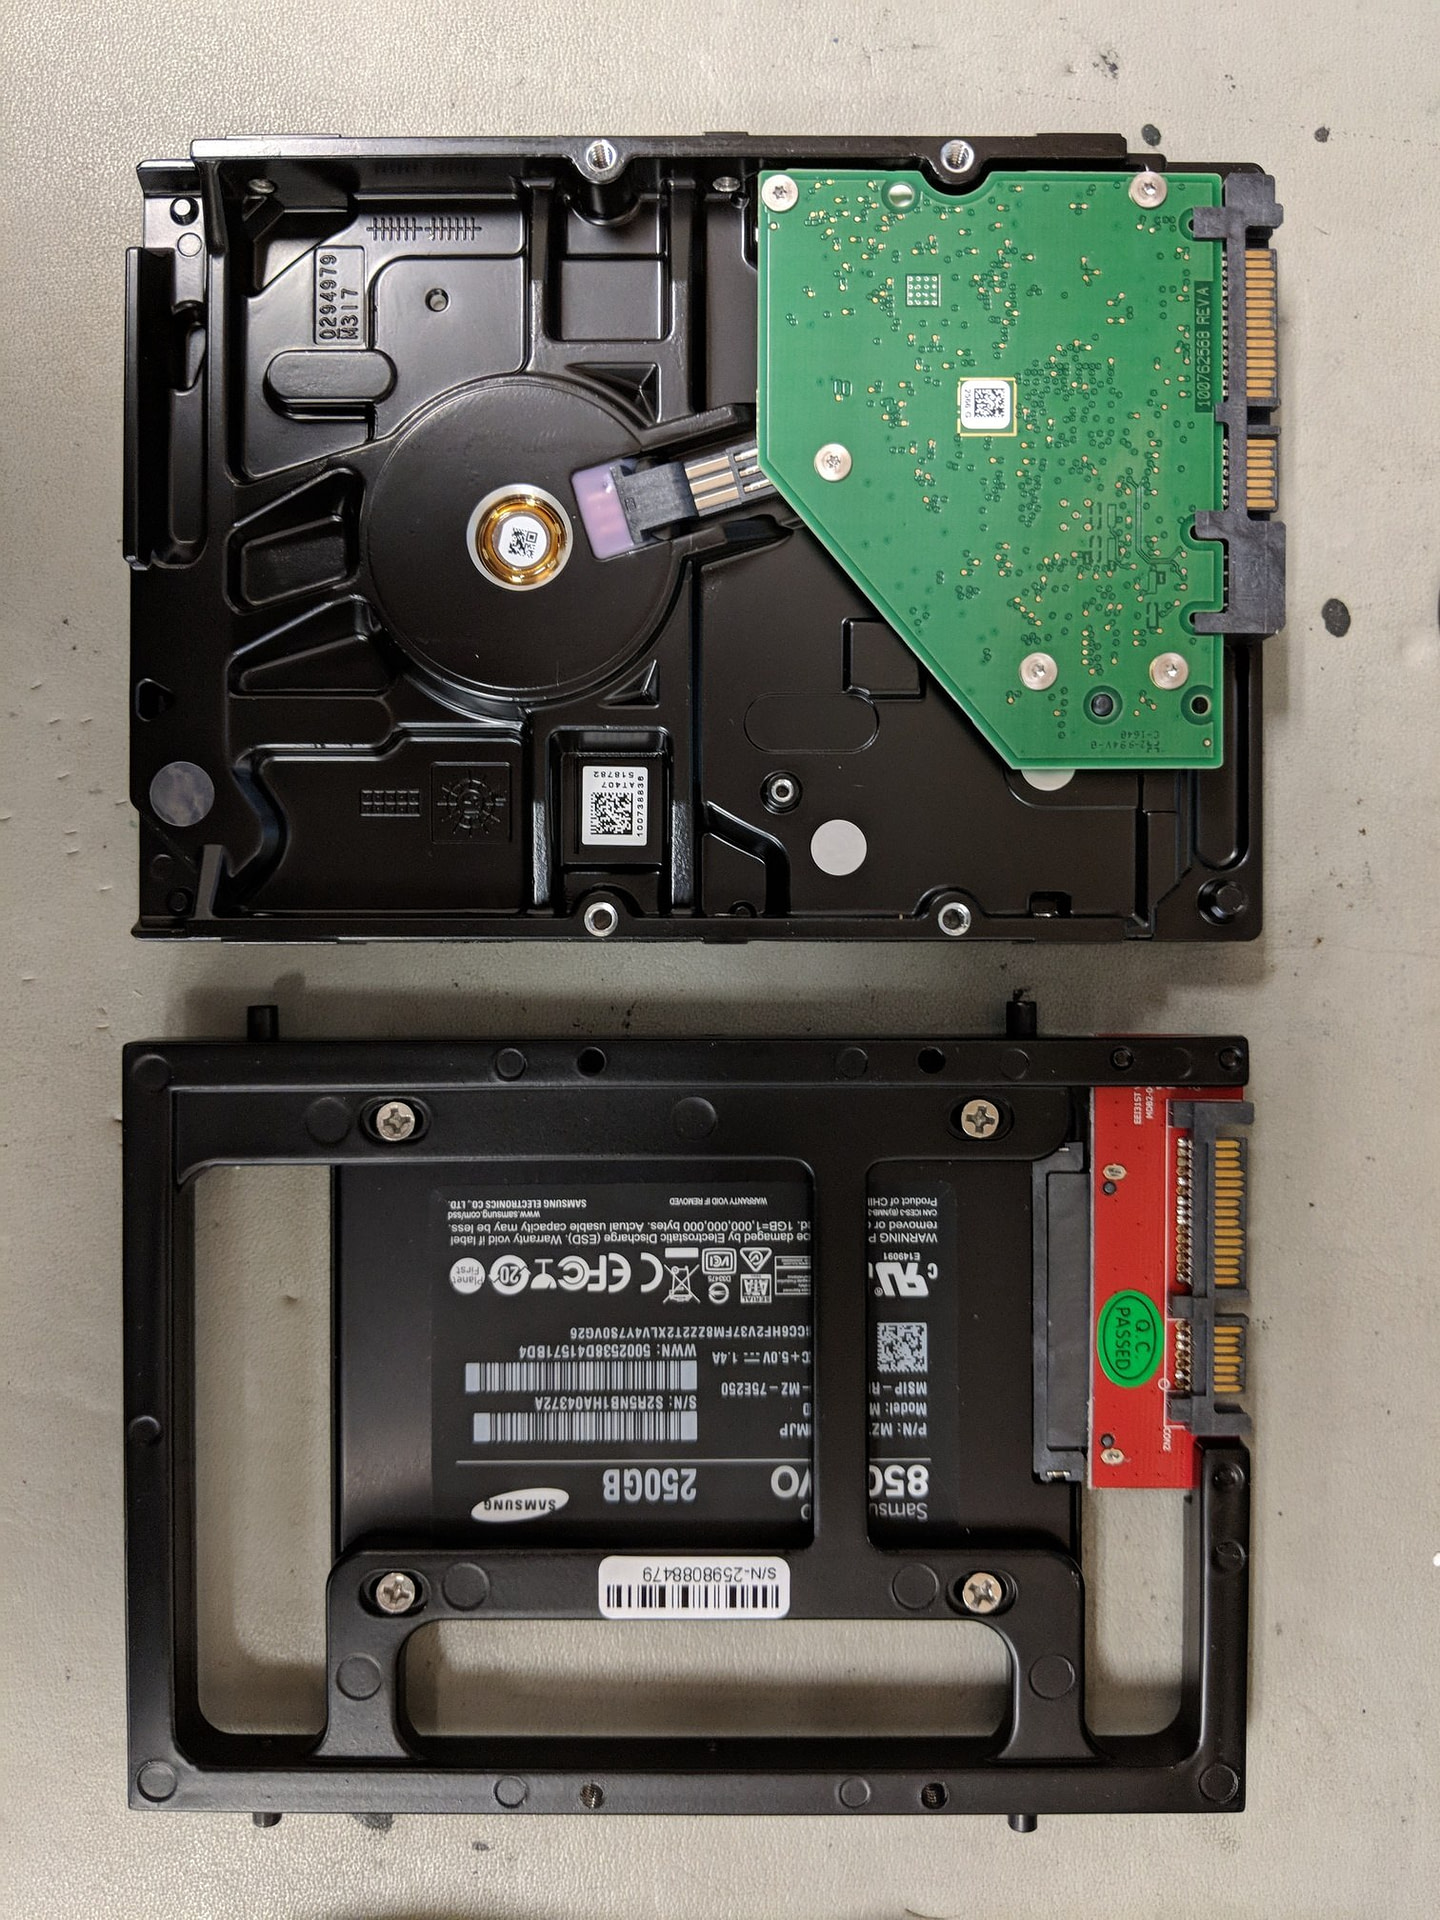 2011 imac hard drive replacement program